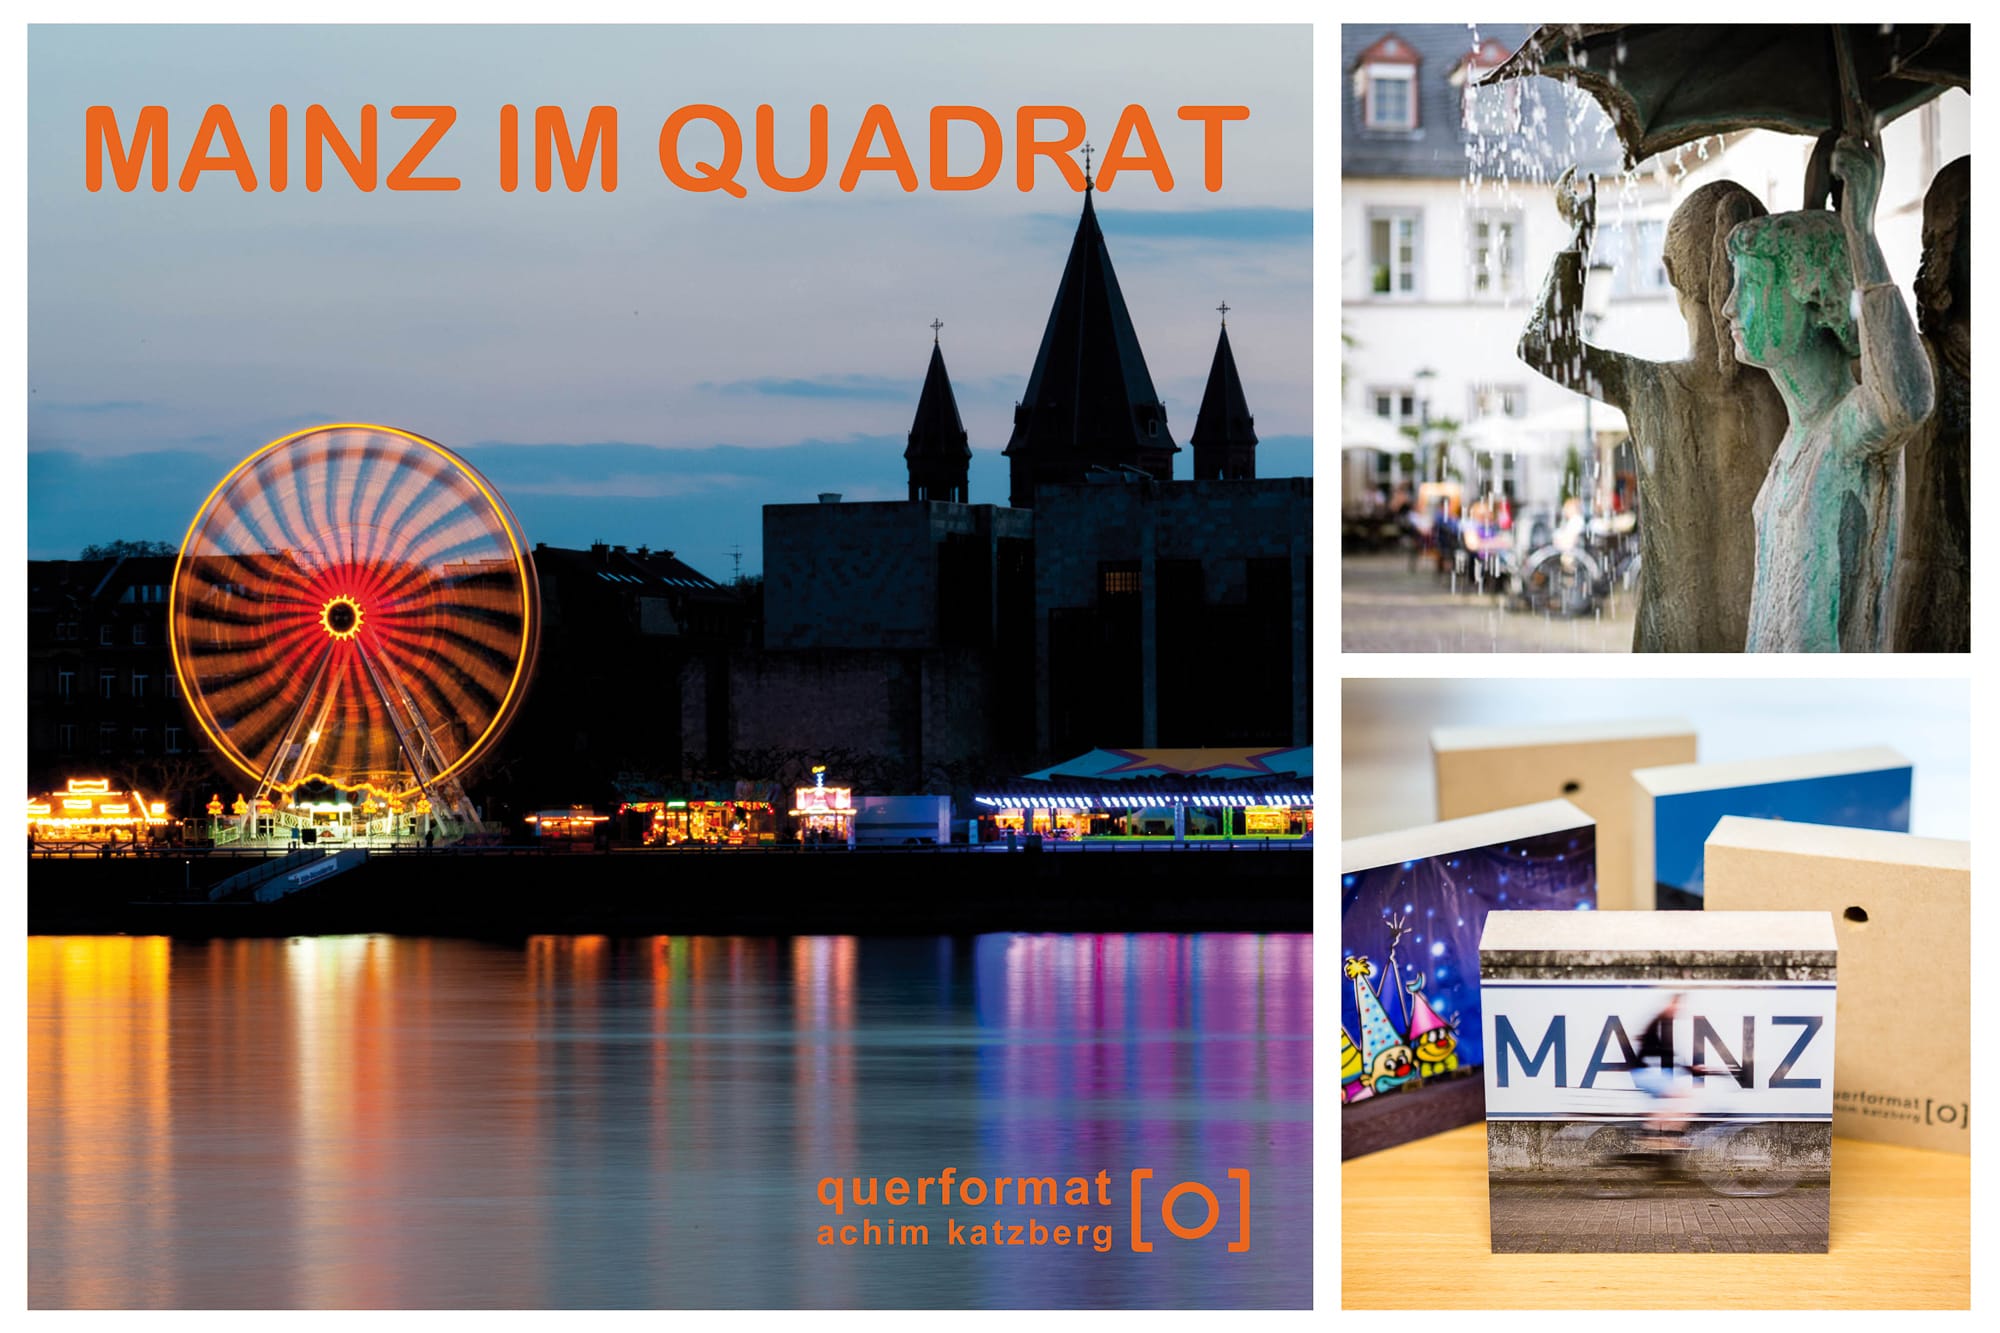 querformat-fotografie - Achim Katzberg - MAINZ IM QUADRAT - neue Vertriebspartner - querformat-fotografie_Mainz im Quadrat - Vertriebspartner-001-3